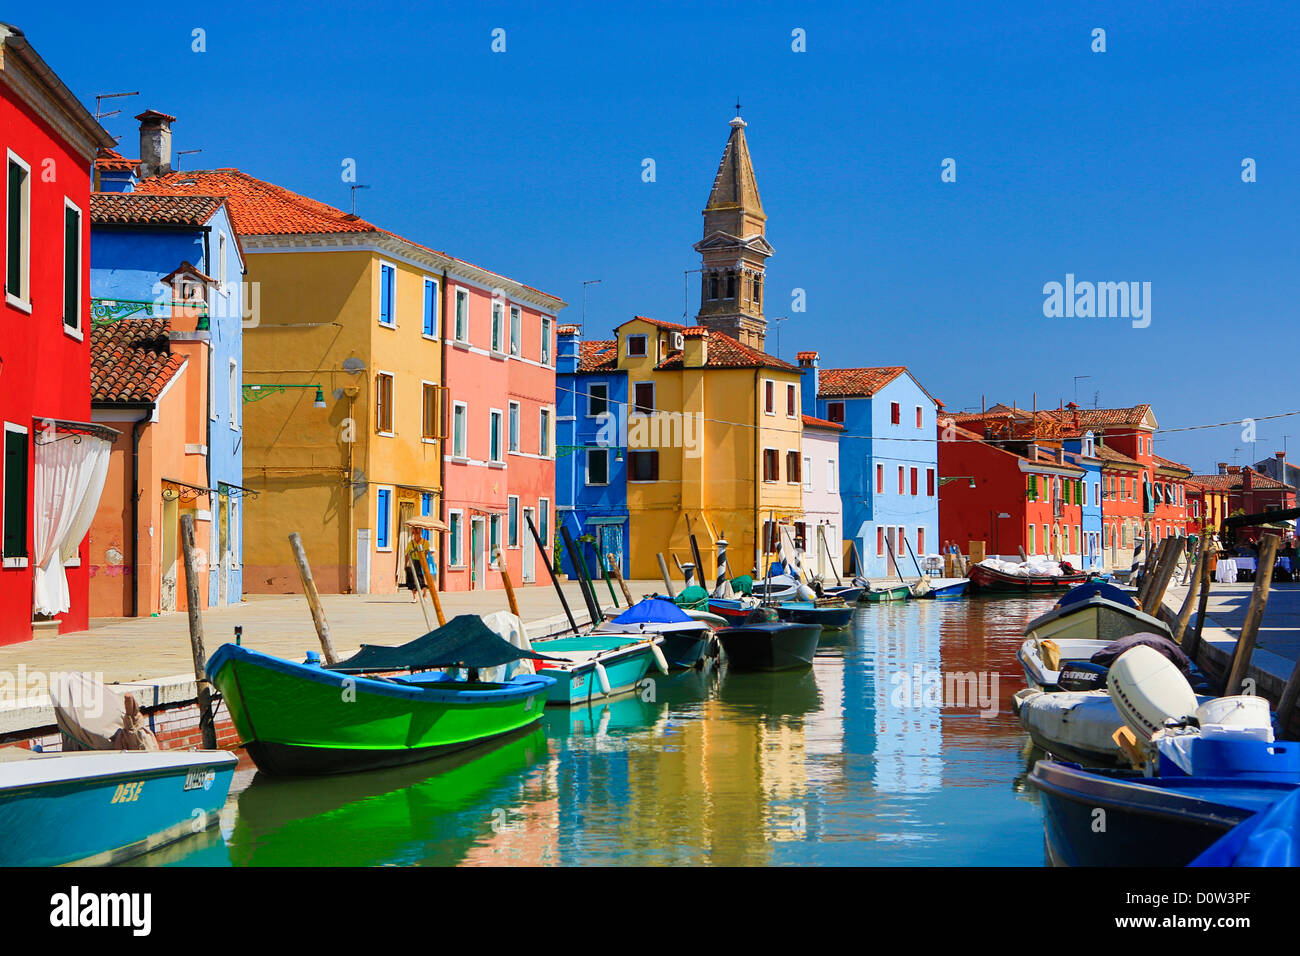 Italia, Europa, viajes, Burano, arquitectura, barcos, canal, coloridos, colores, turismo, Venecia Foto de stock